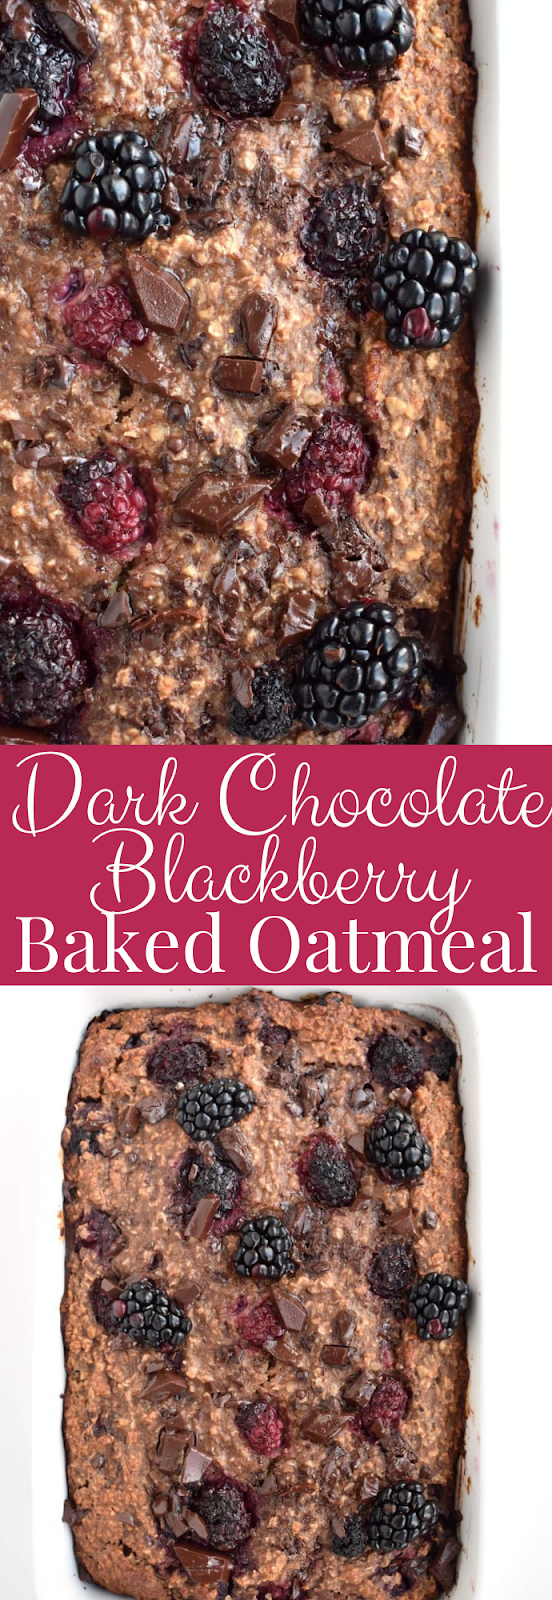 Dark Chocolate Blackberry Baked Oatmeal recipe